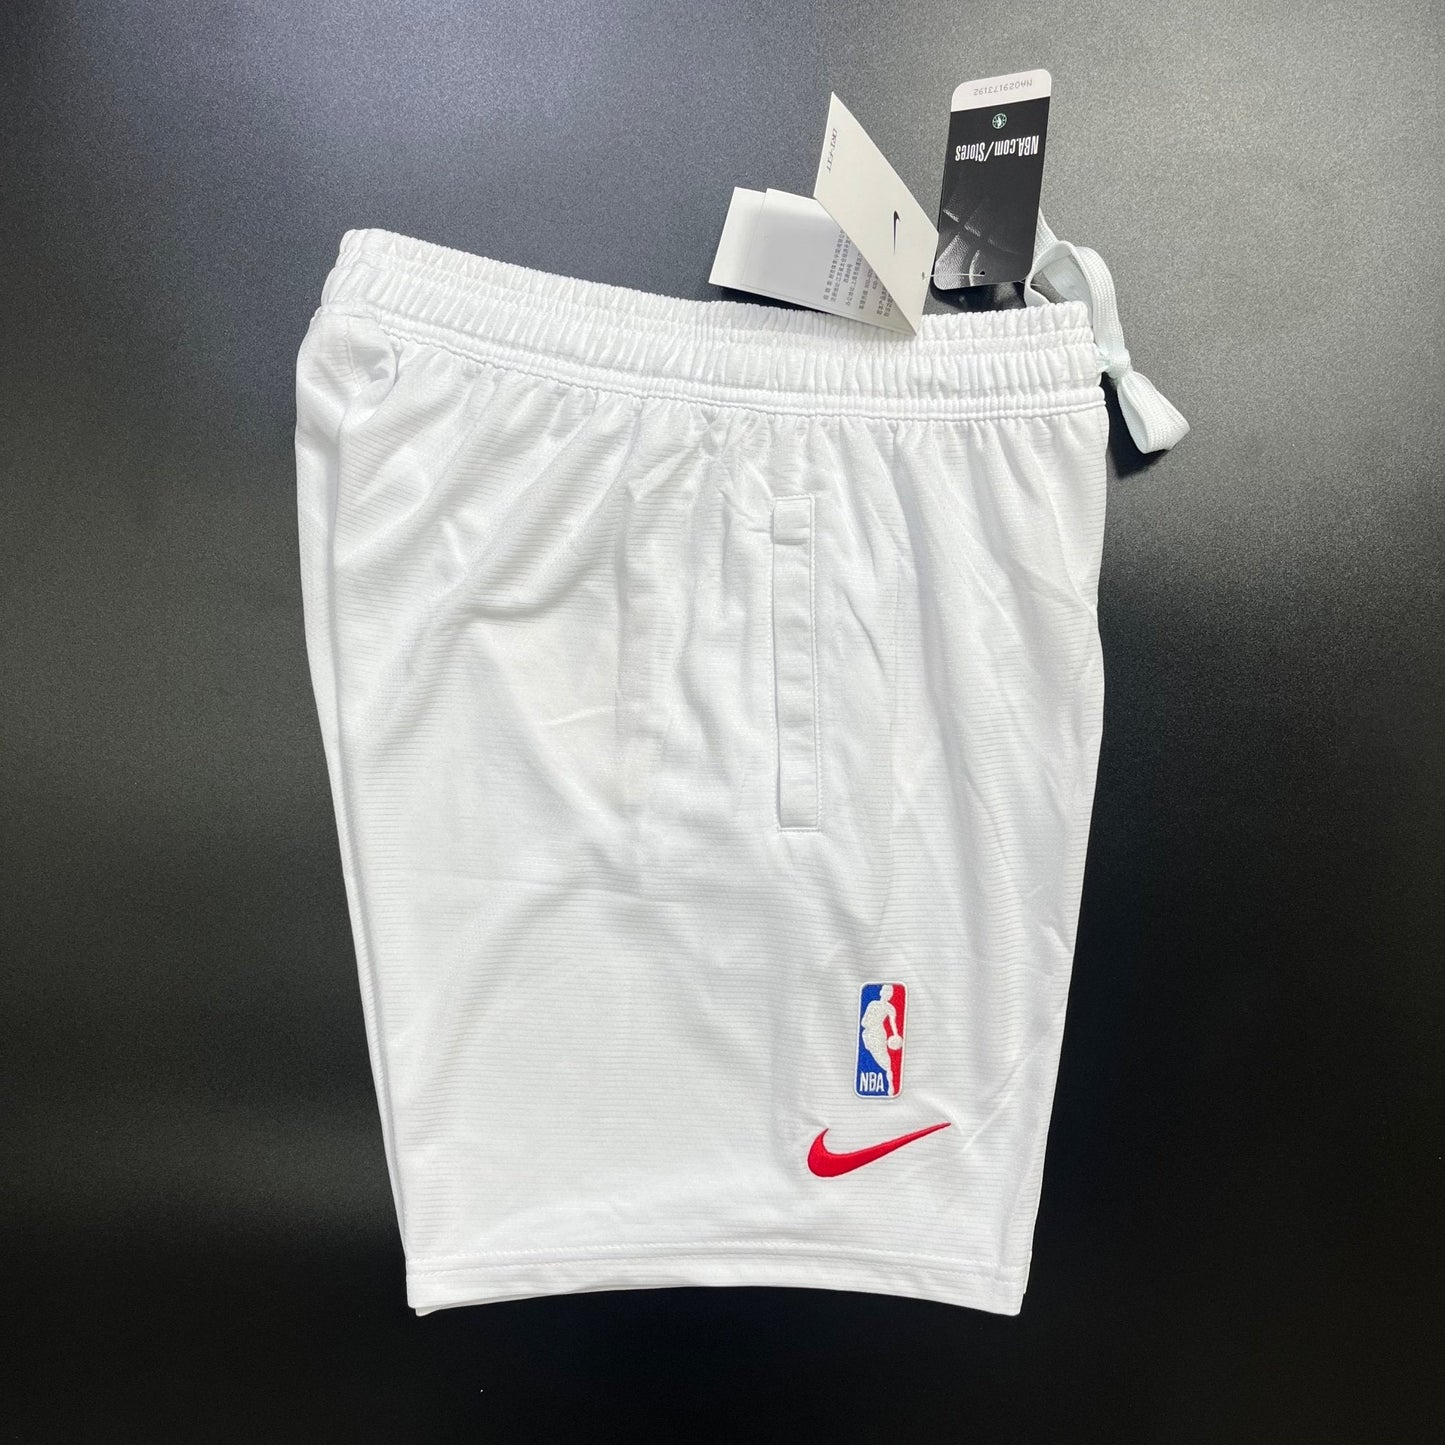 Shorts casual do Miami Heat branco